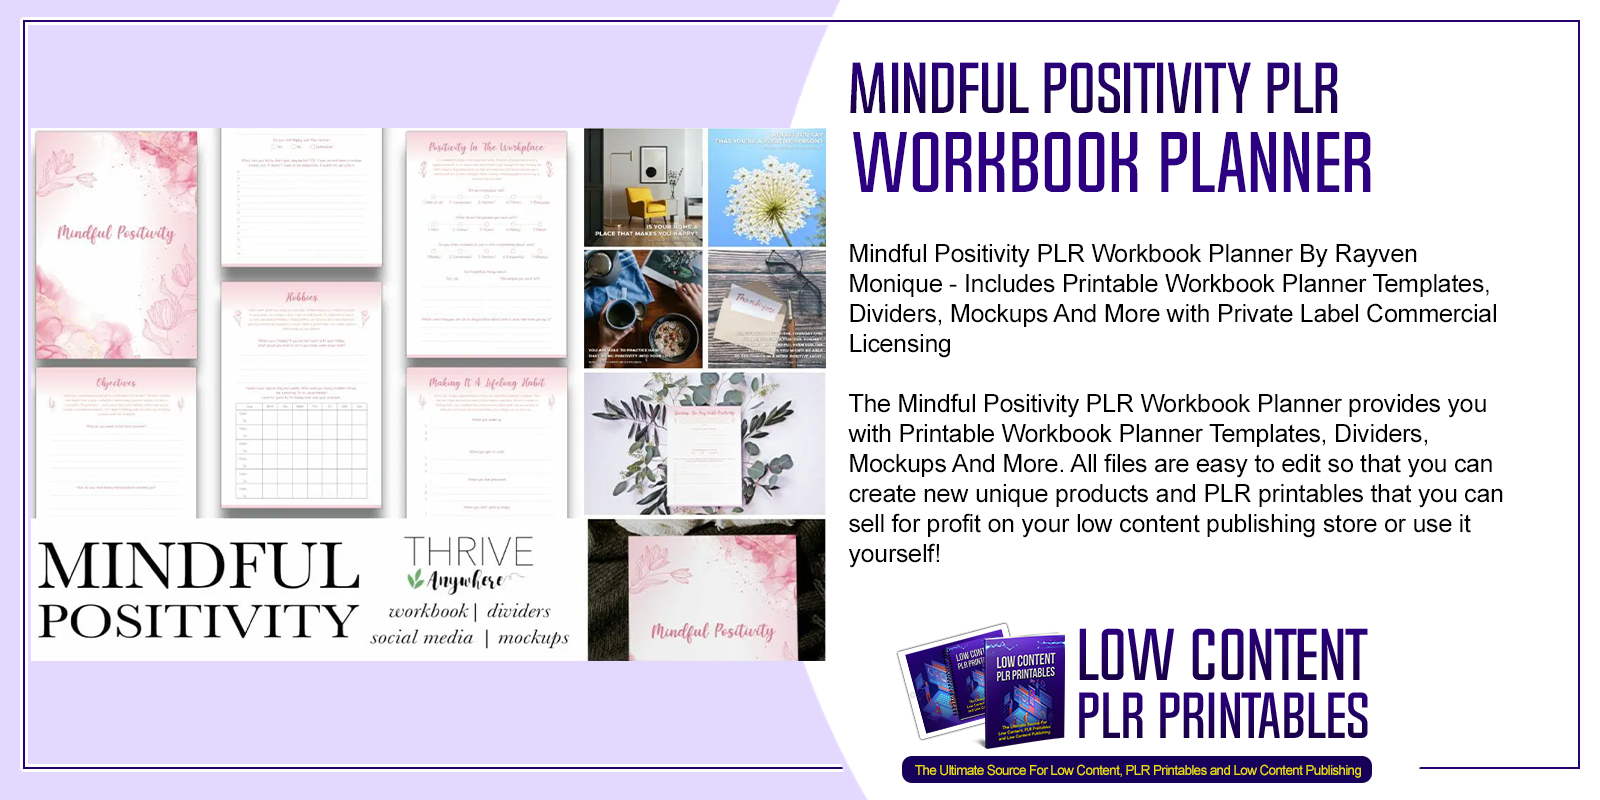 Mindful Positivity PLR Workbook Planner